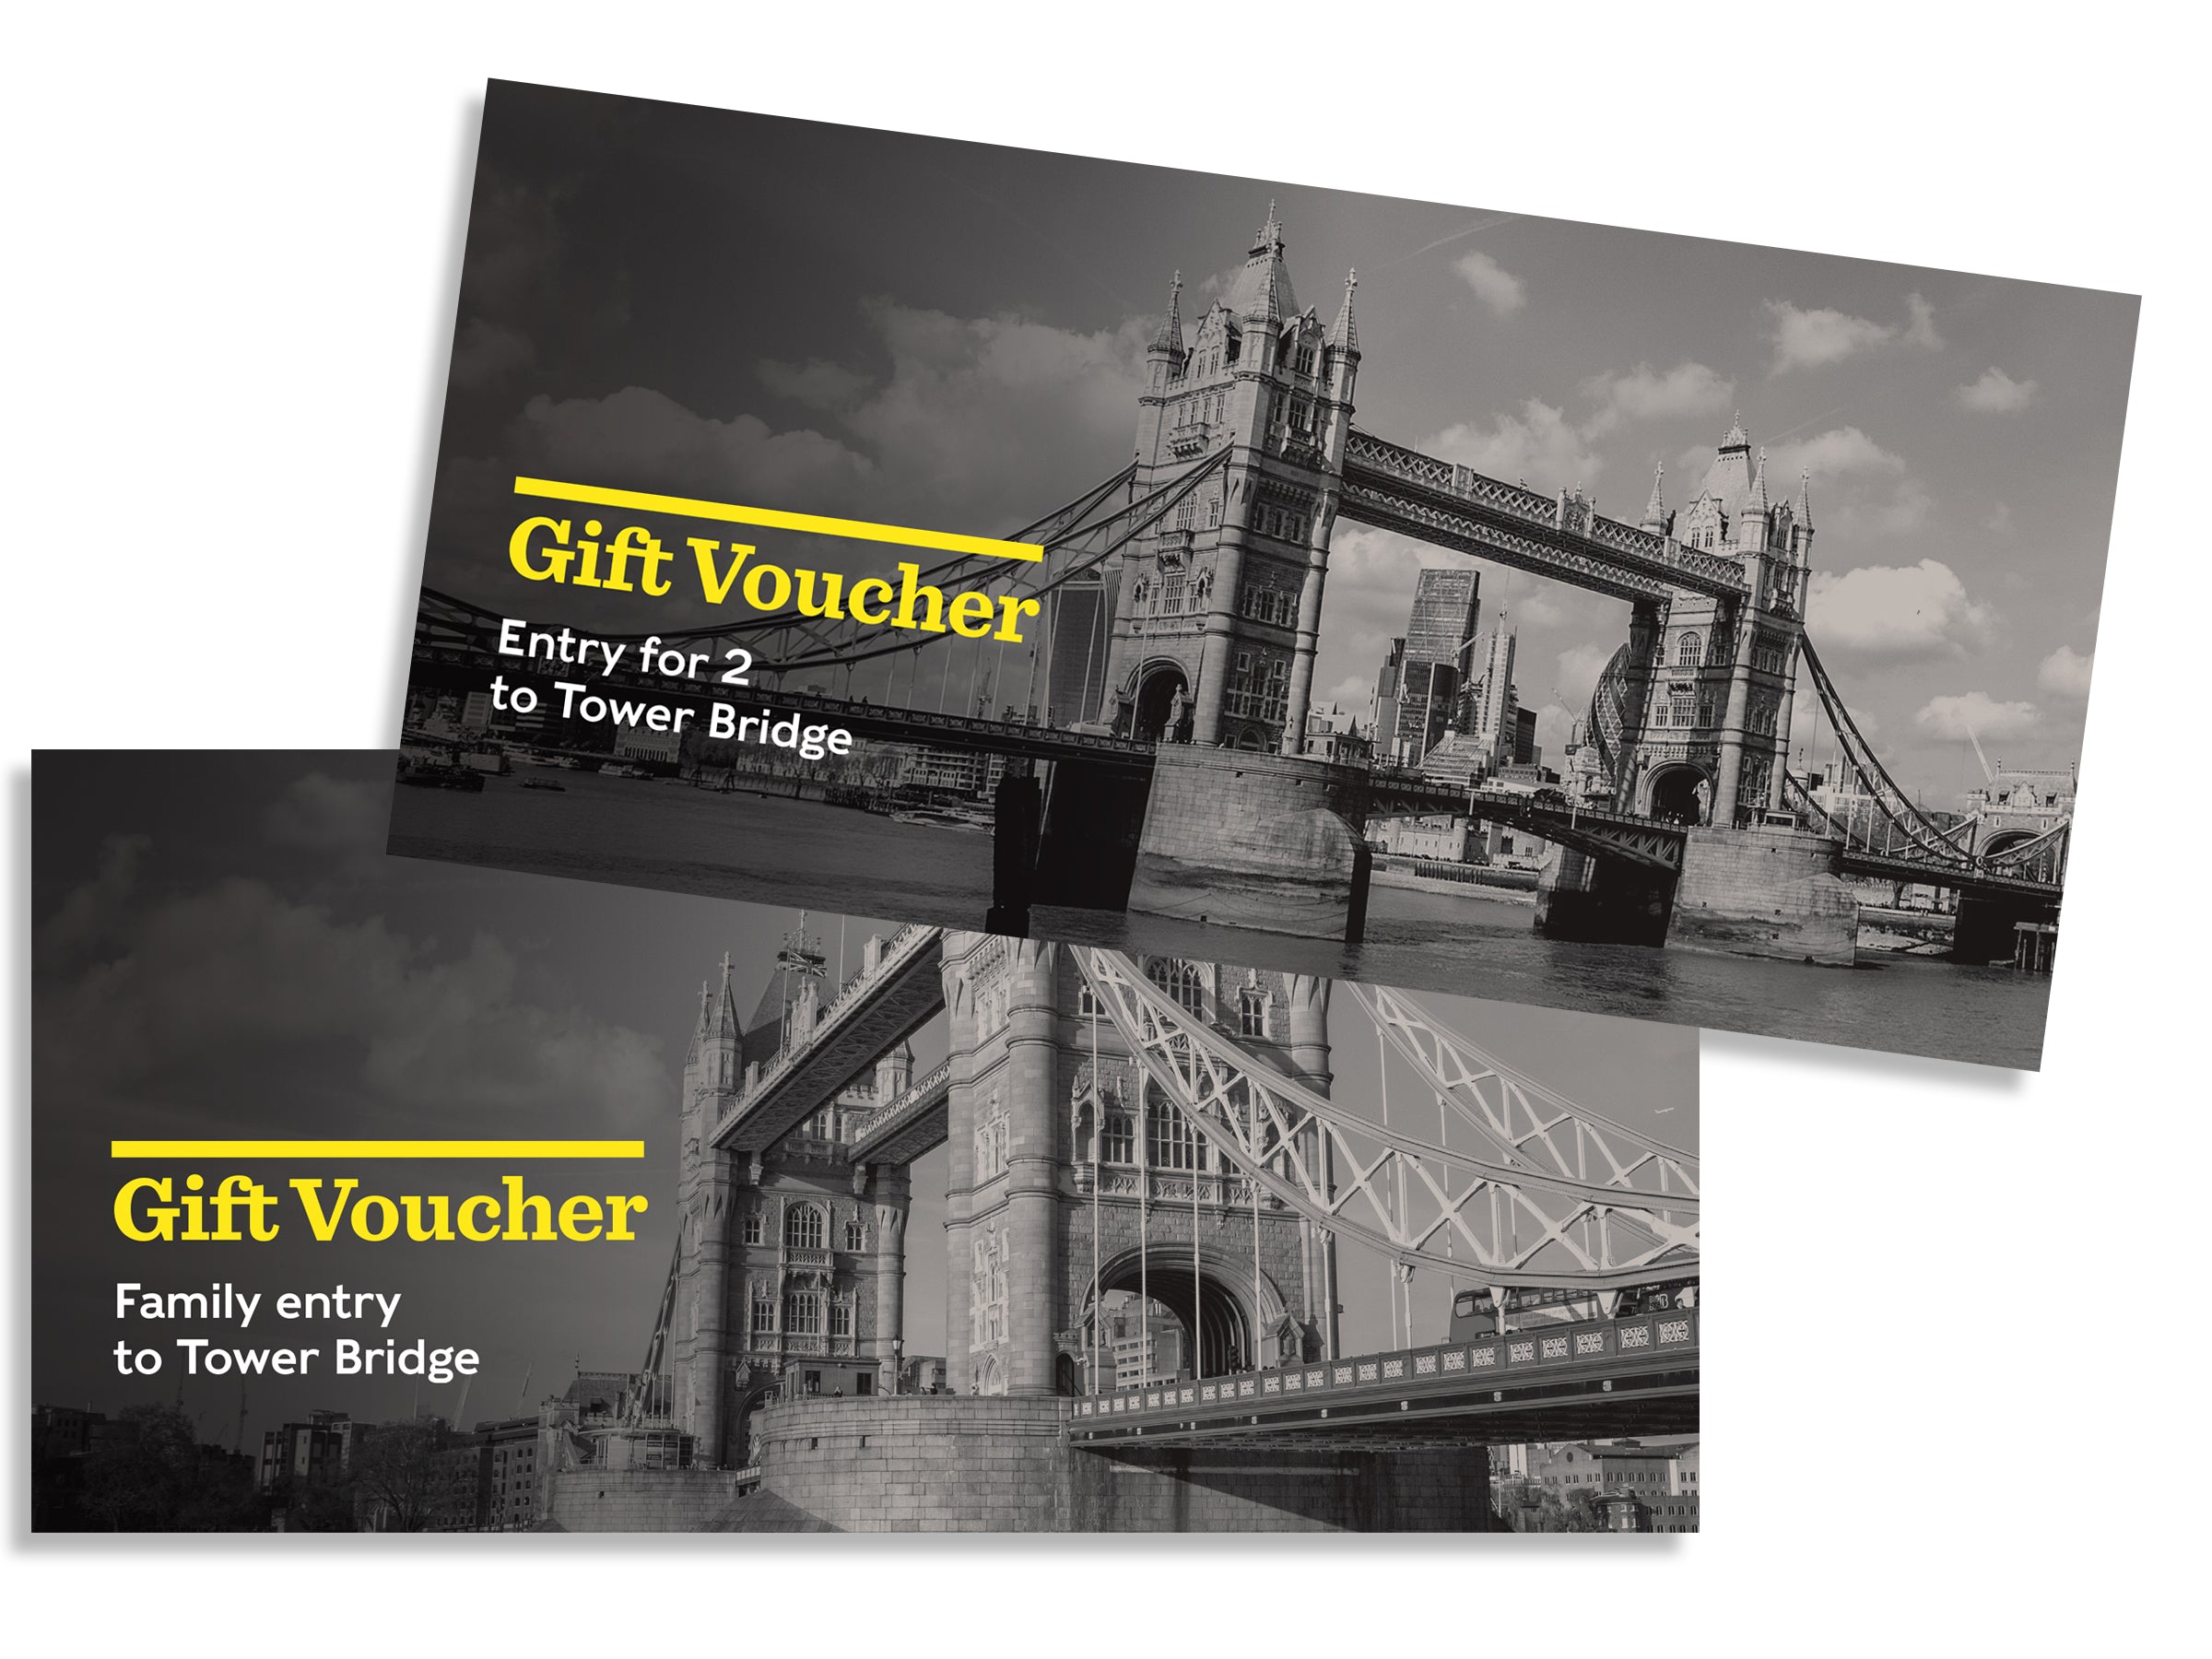 Gift vouchers to visit Tower Bridge